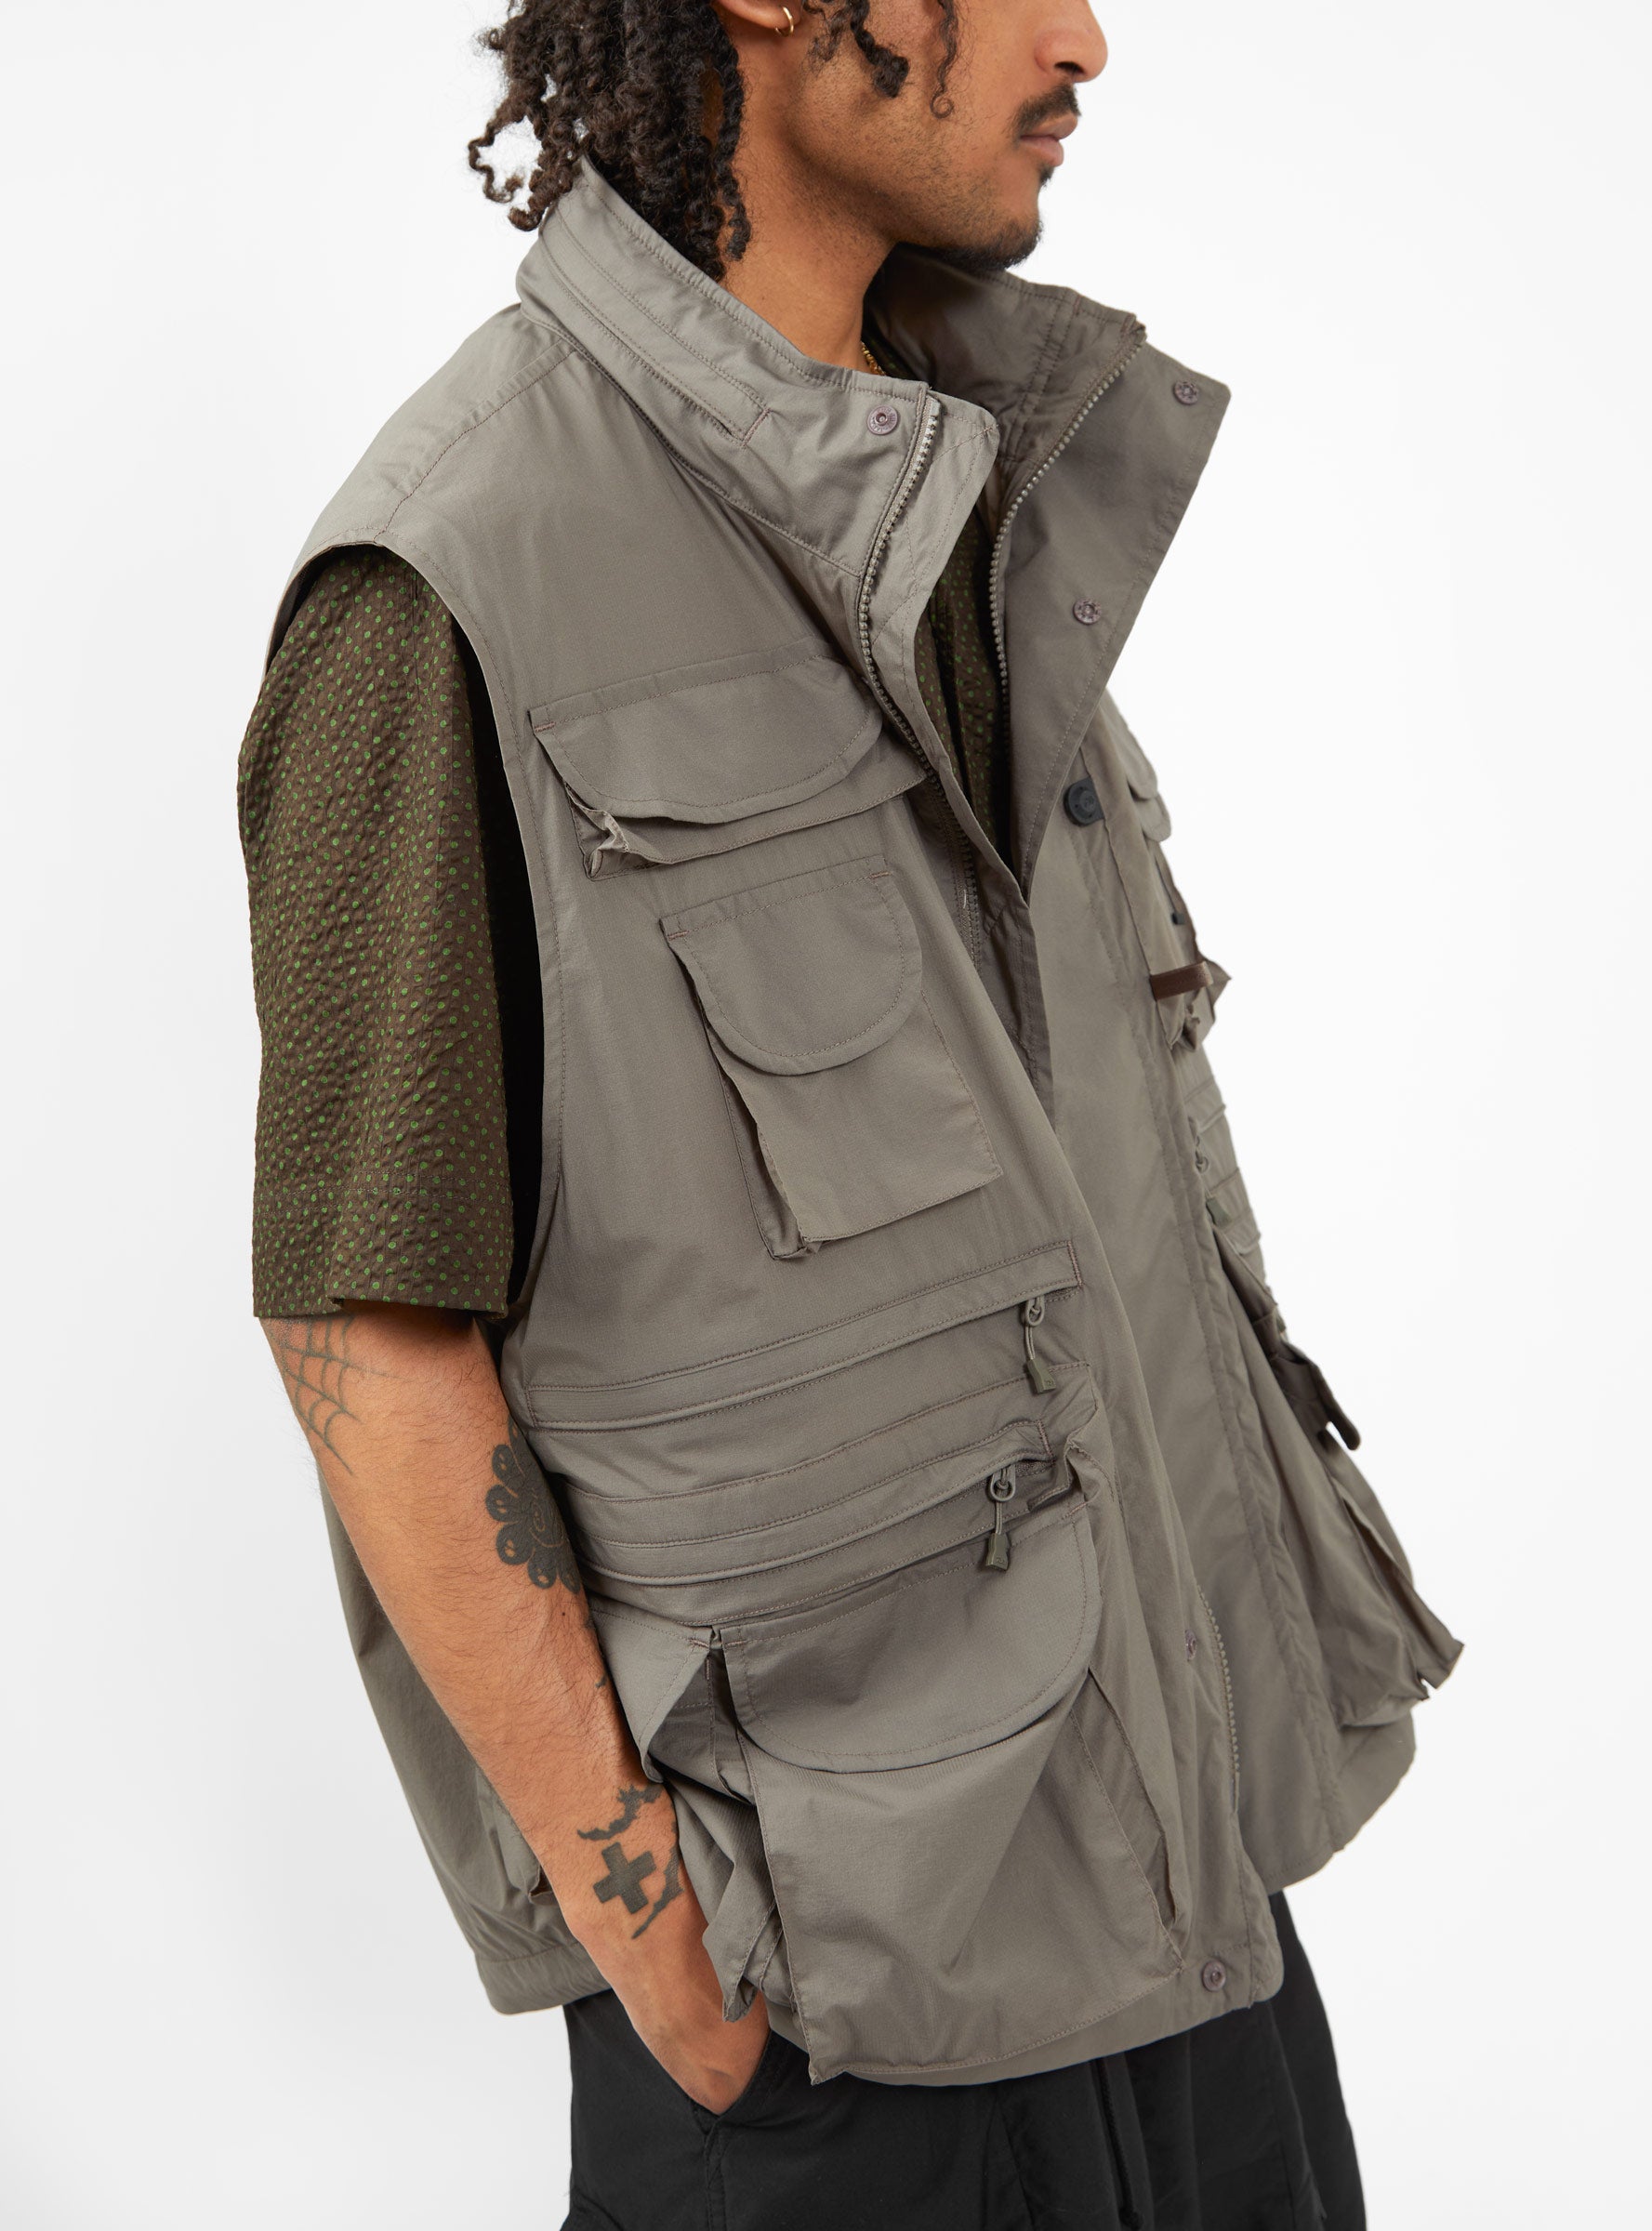 daiwa pure39 perfect fishing jacket XL22AWのアイテムになります